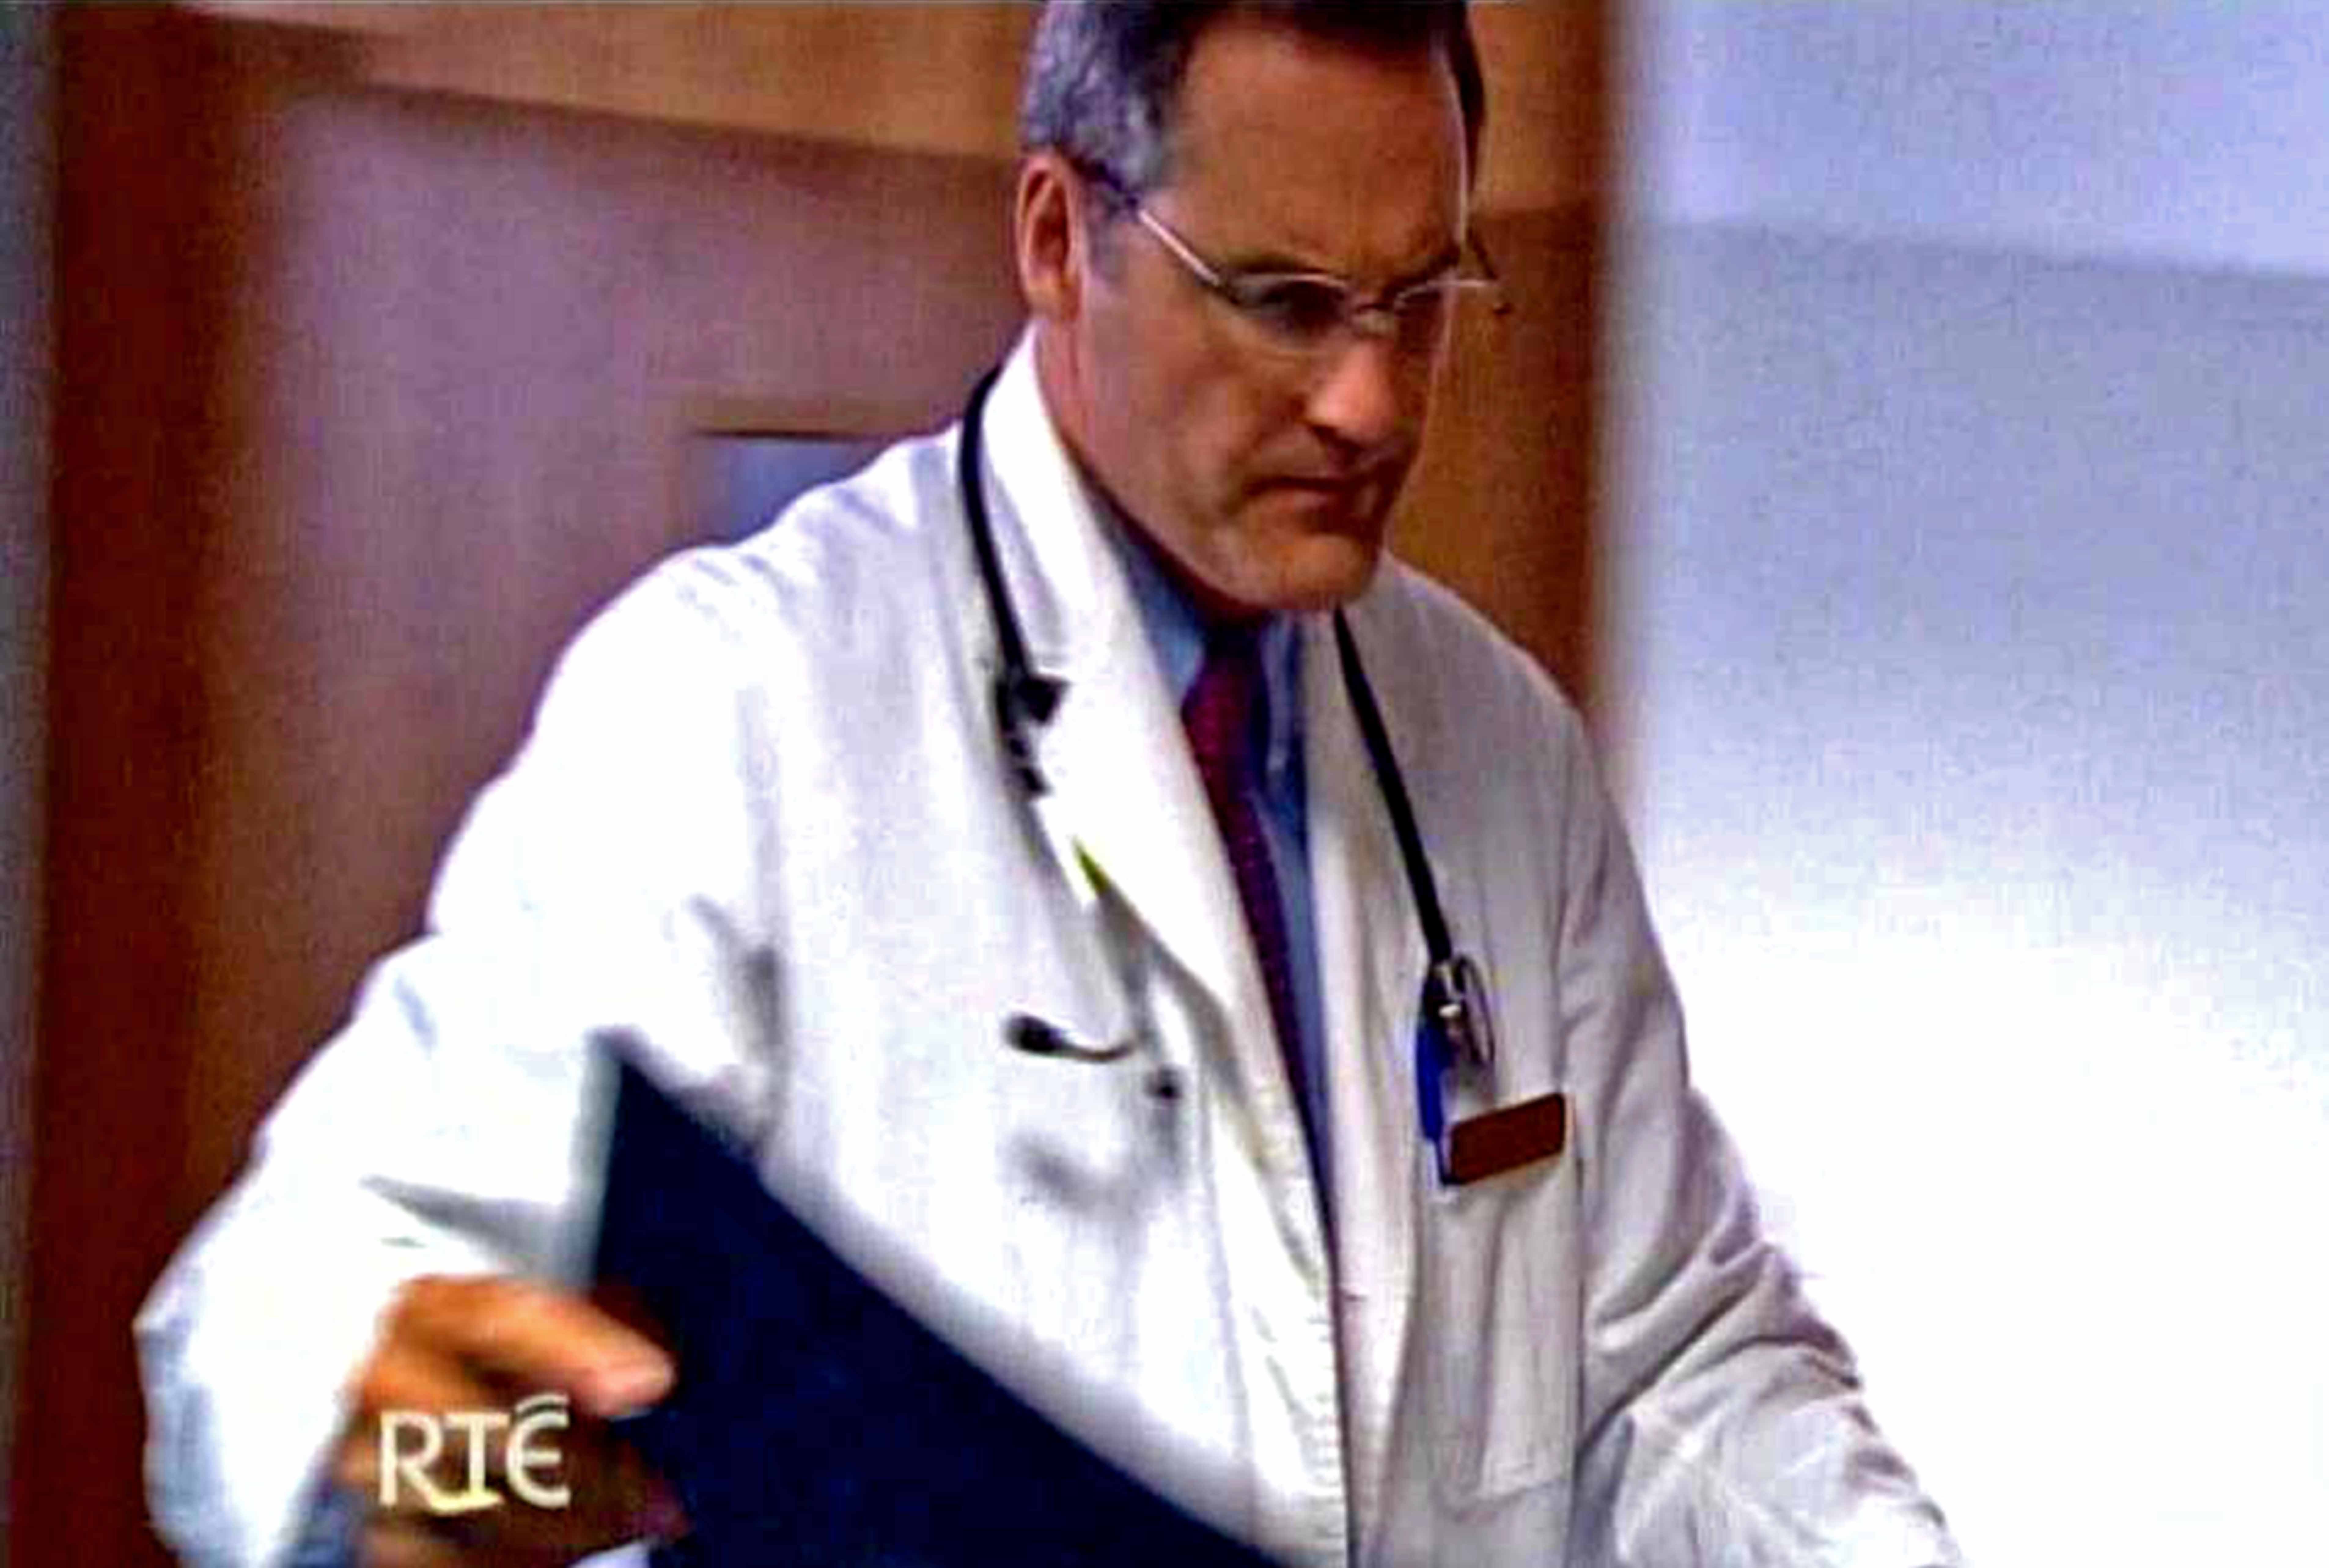 Peter Vollebregt as Dr. Richard Cane DOCTORS